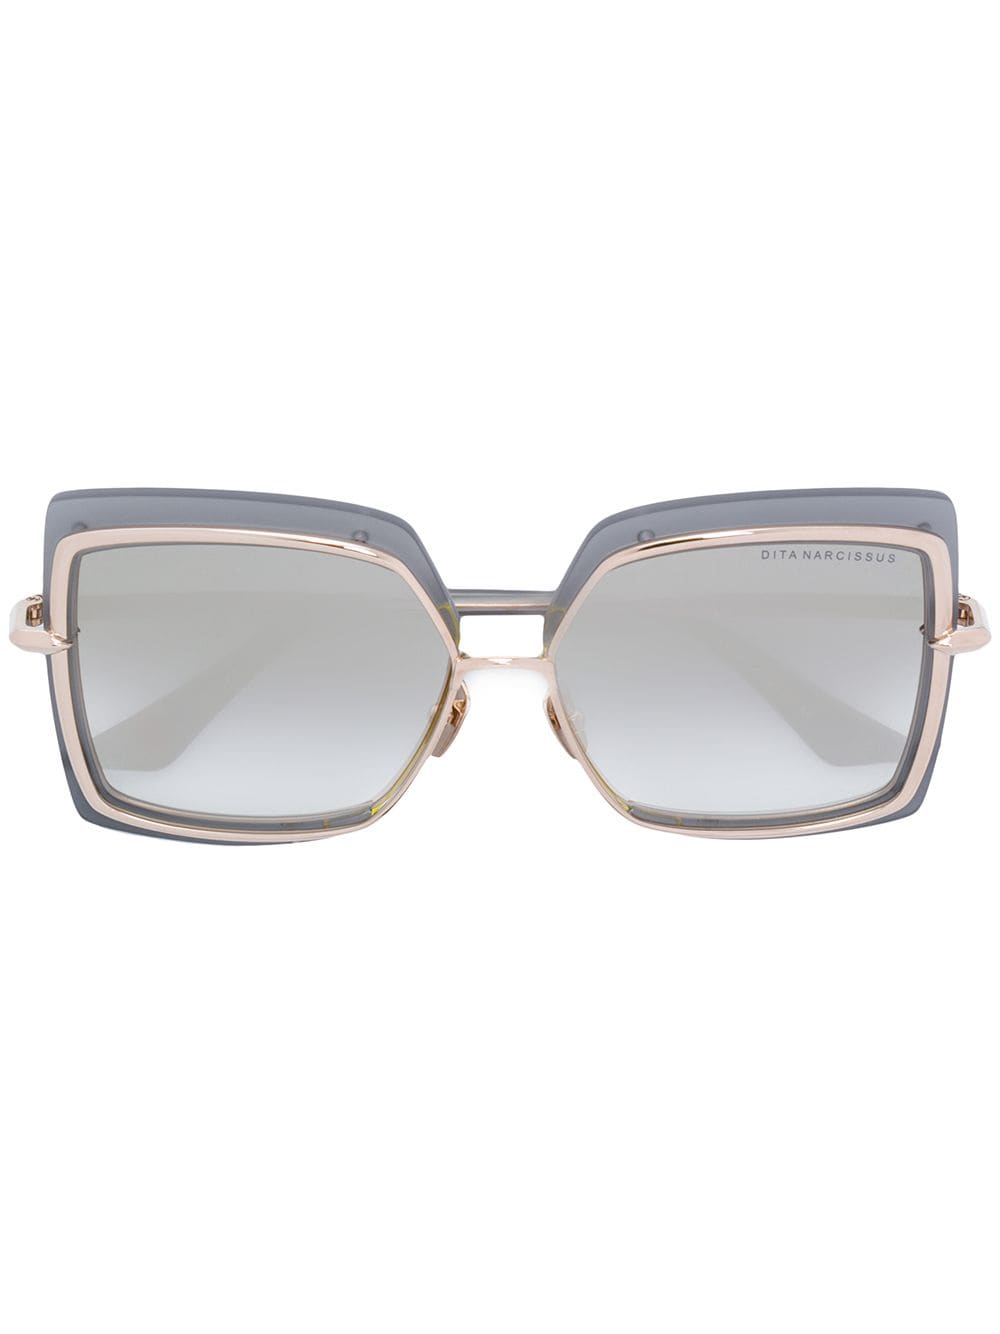 Dita Eyewear Narcissus sunglasses - Grey von Dita Eyewear